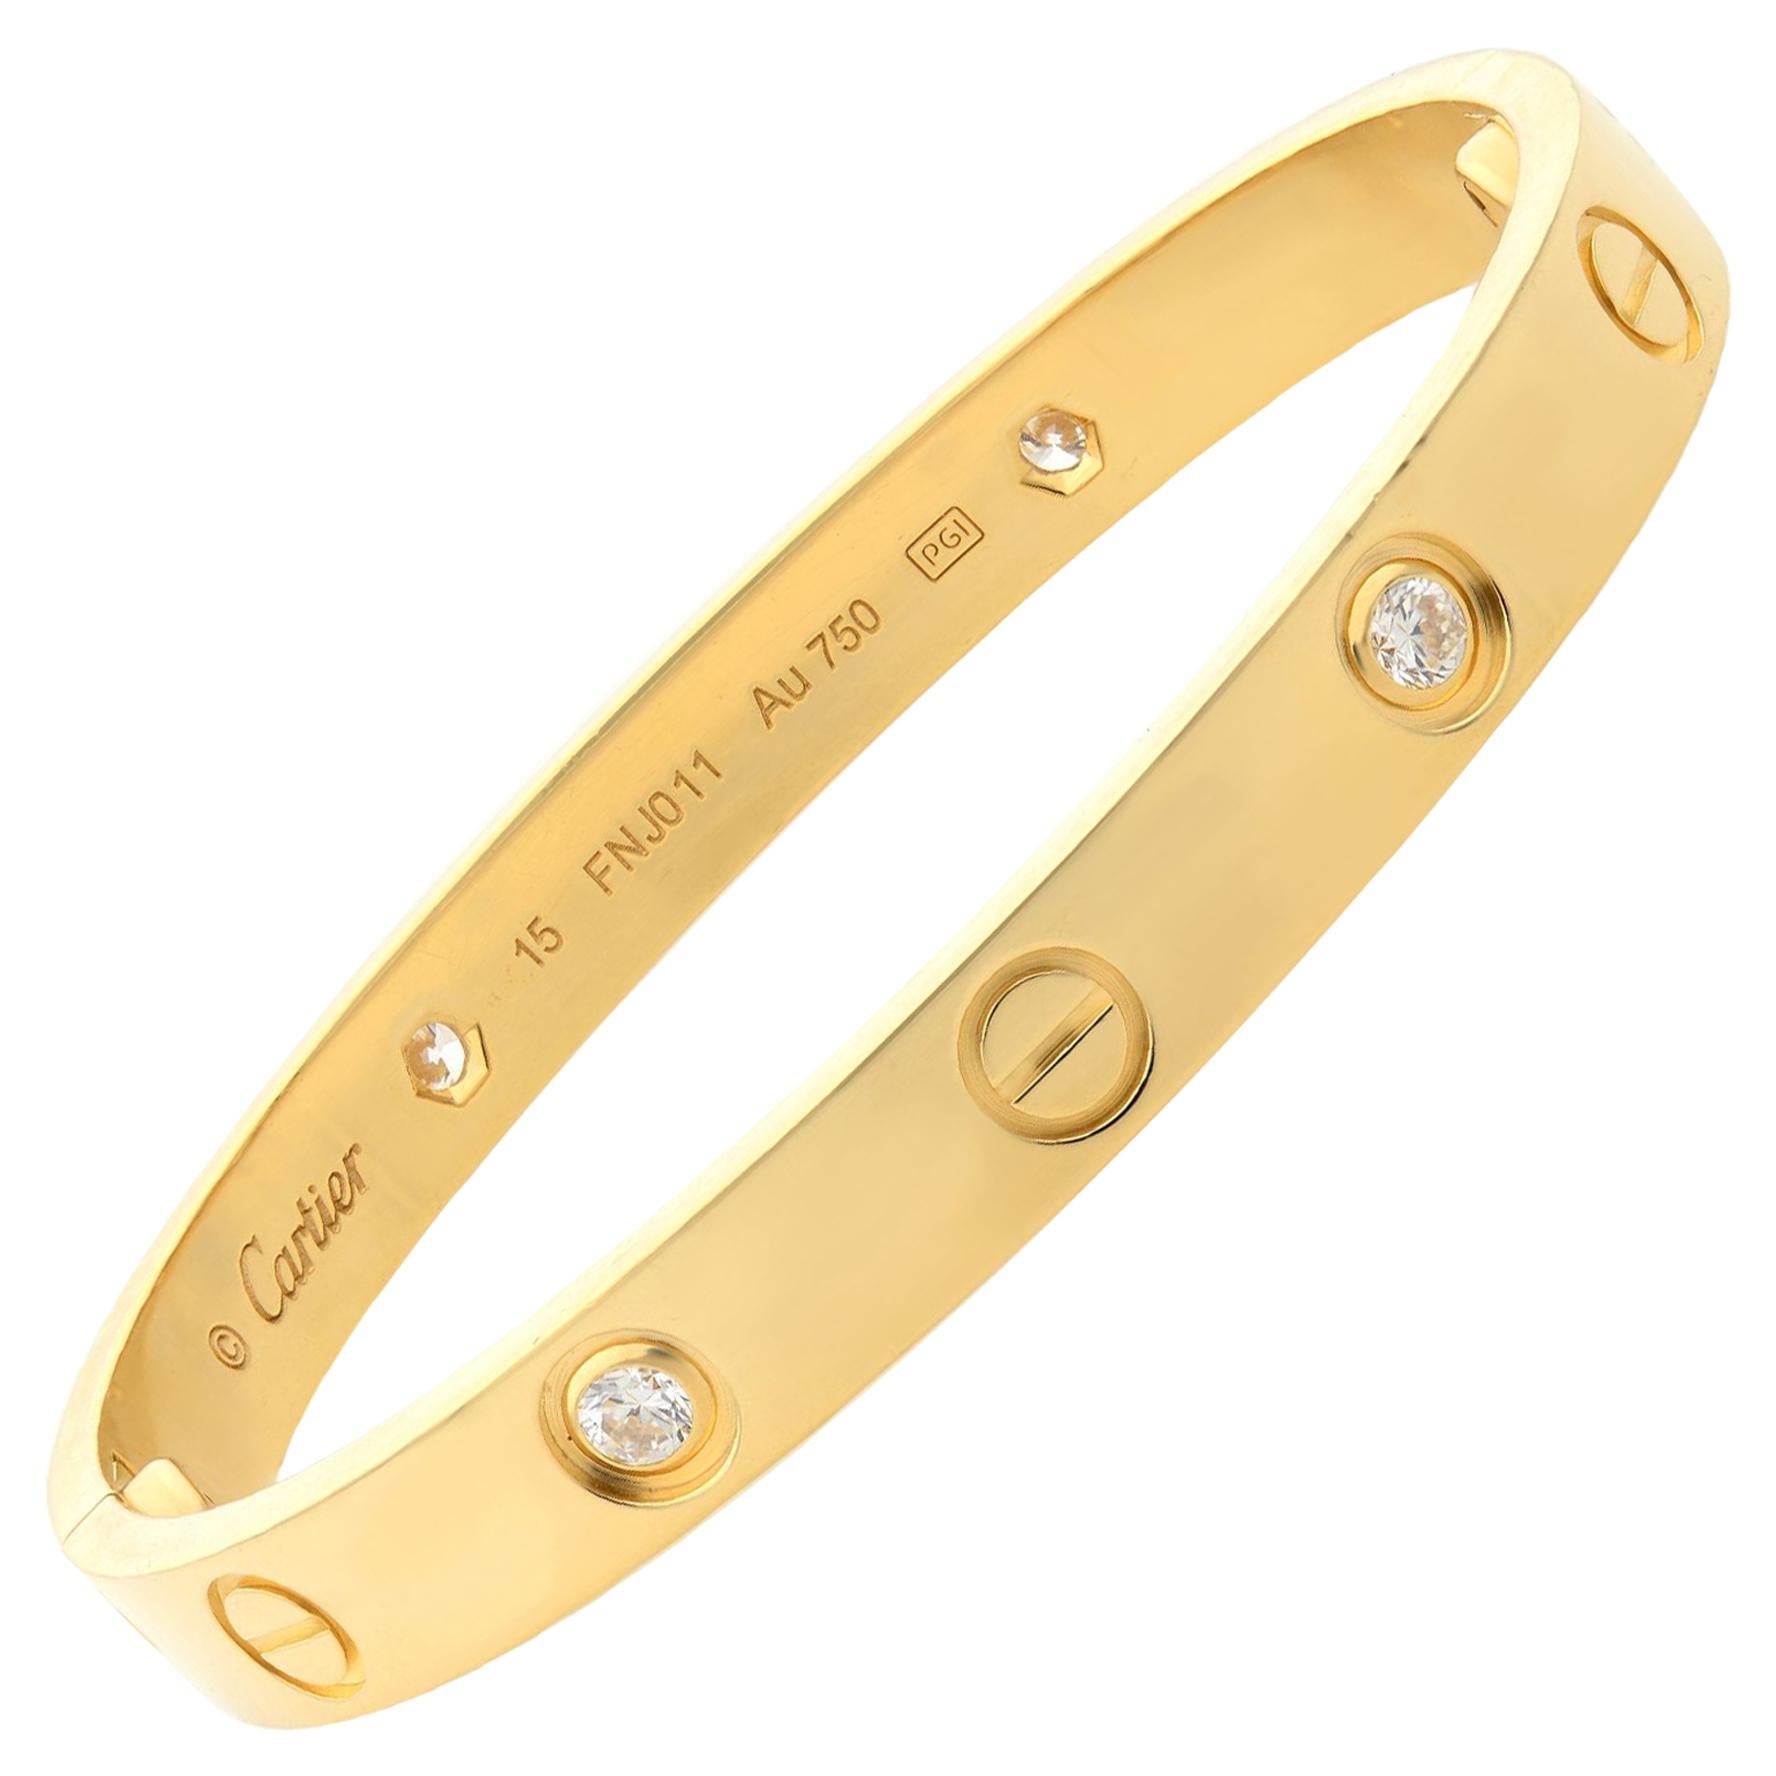 luxstina / jewlery / stack / diamond / Tennis bracelet / Cartier Love  bracelelt / gold … | Tennis bracelet diamond, Cartier love bracelet diamond,  Jewelry lookbook